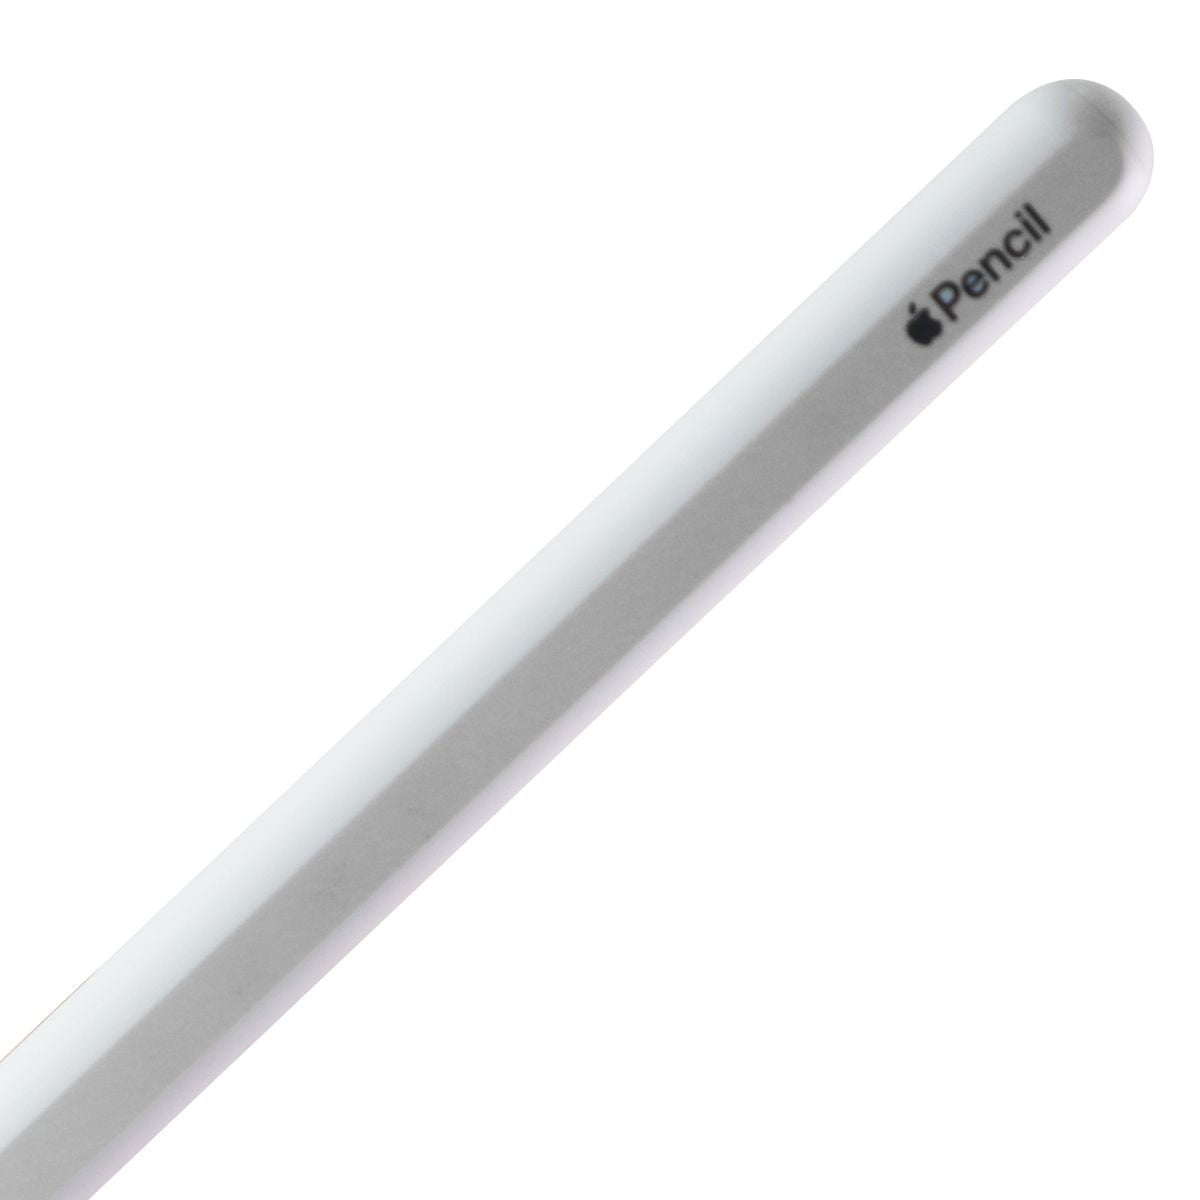 Apple Pencil (2nd Generation) for iPad Pro - White (MU8F2AM/A 